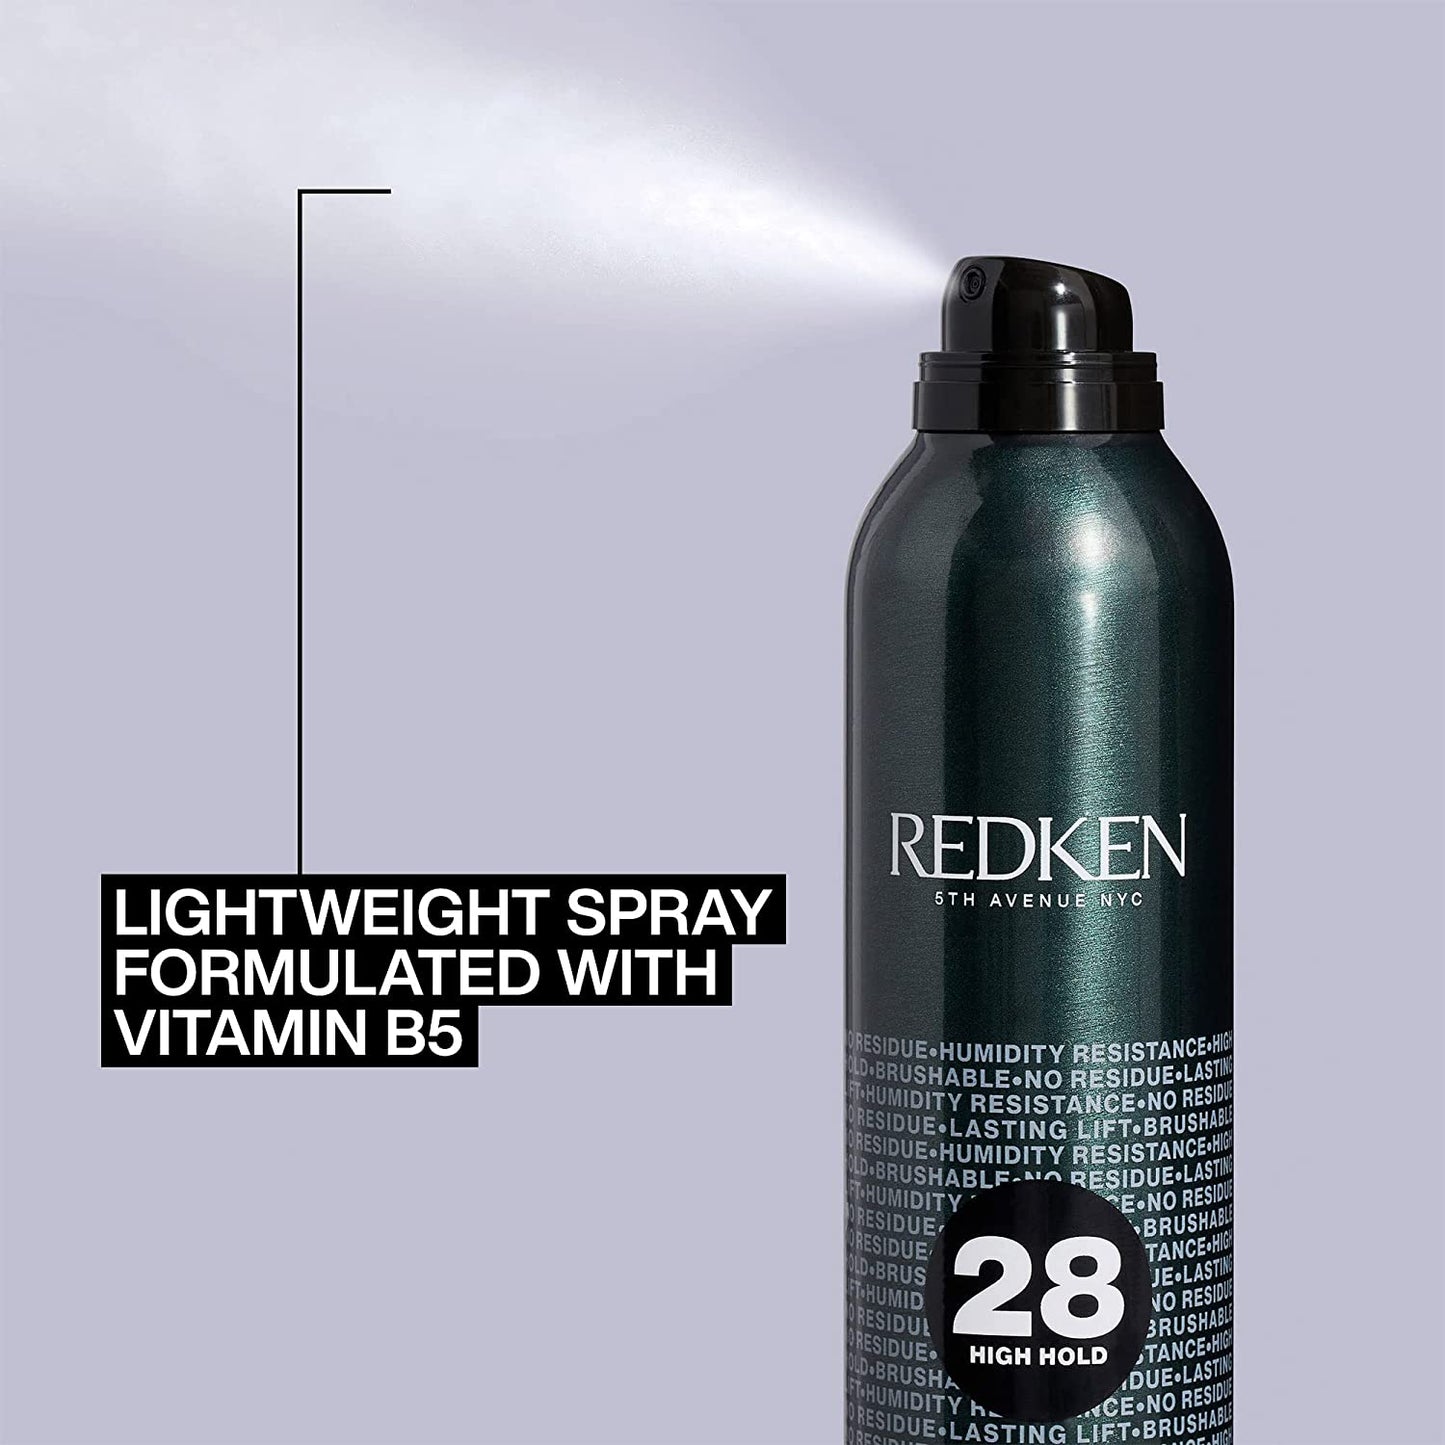 Redken 5th Avenue Nyc 28 High Hold Control HairSpray Anti-Humidity Spray 9.8 oz/ 278g